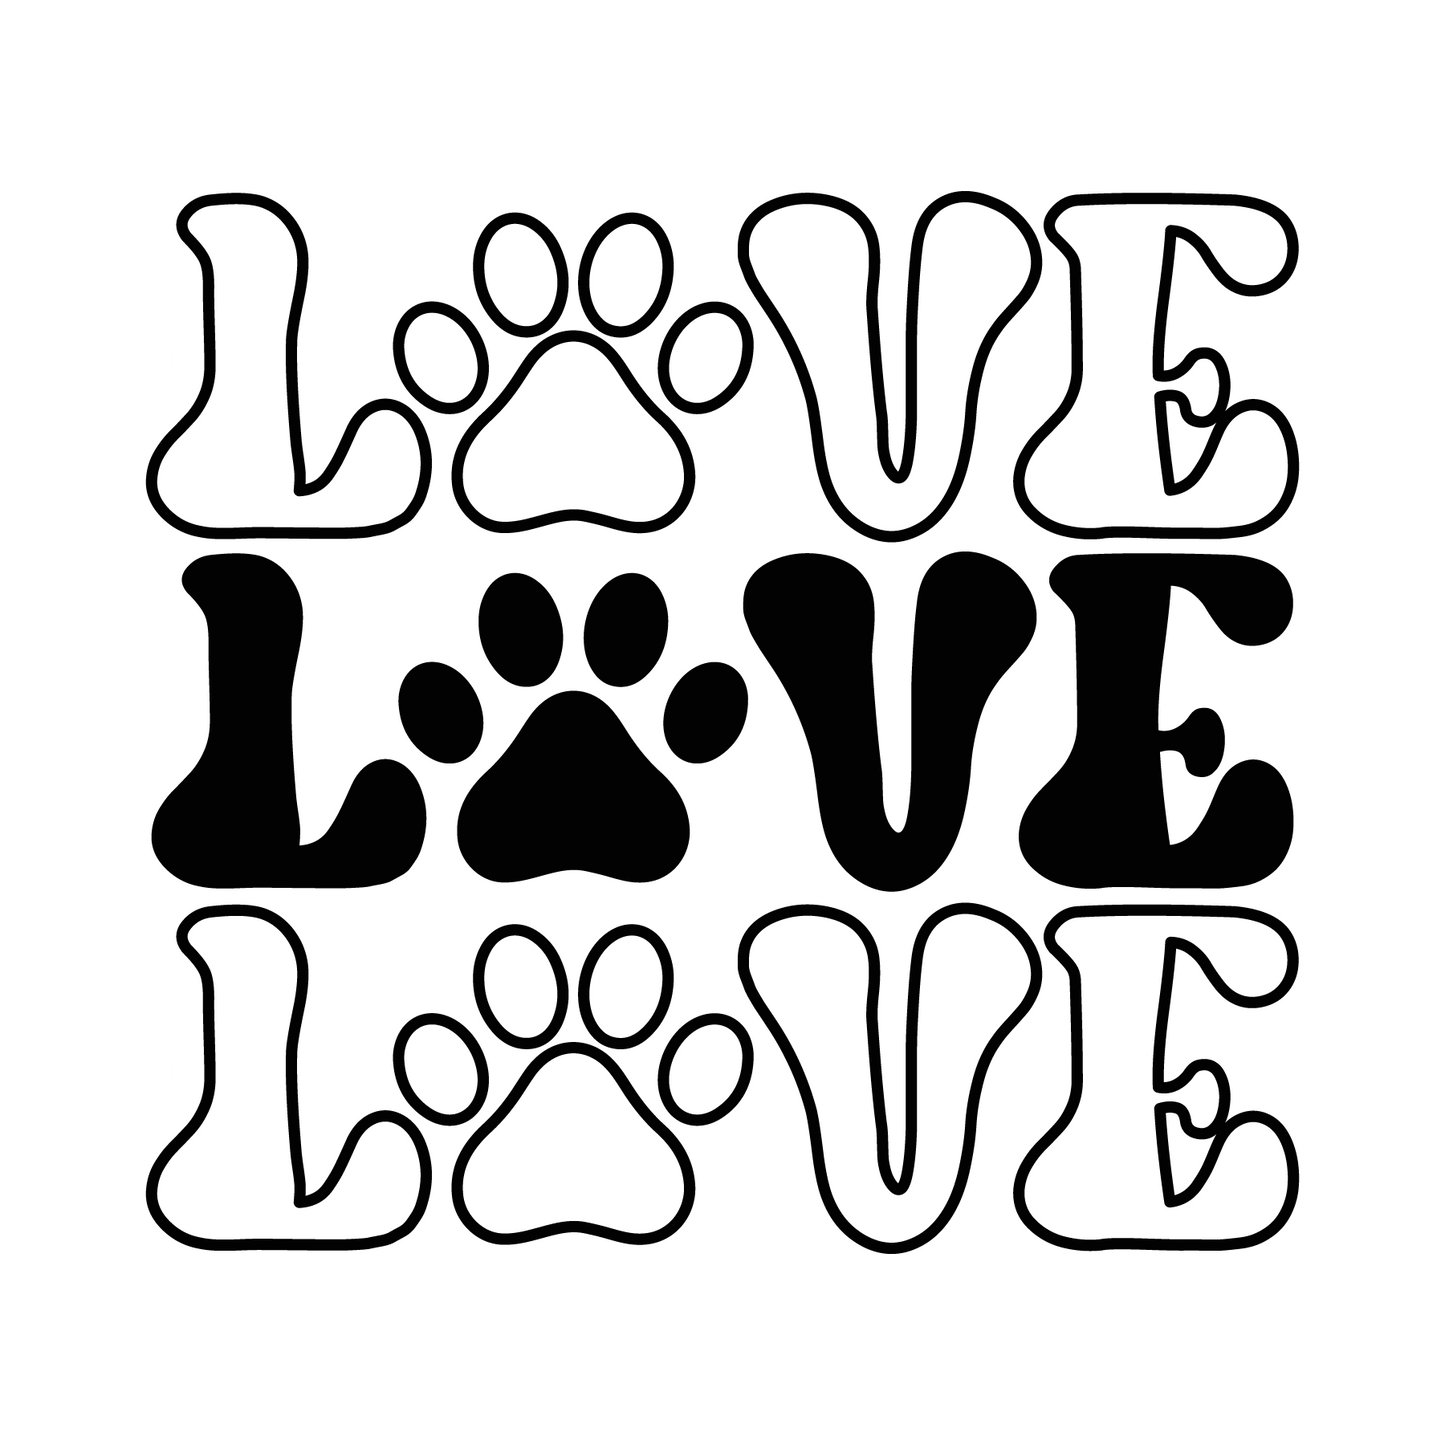 Stickers - Love w/Dog Foot Print Sticker, Dog Lovers' Stickers